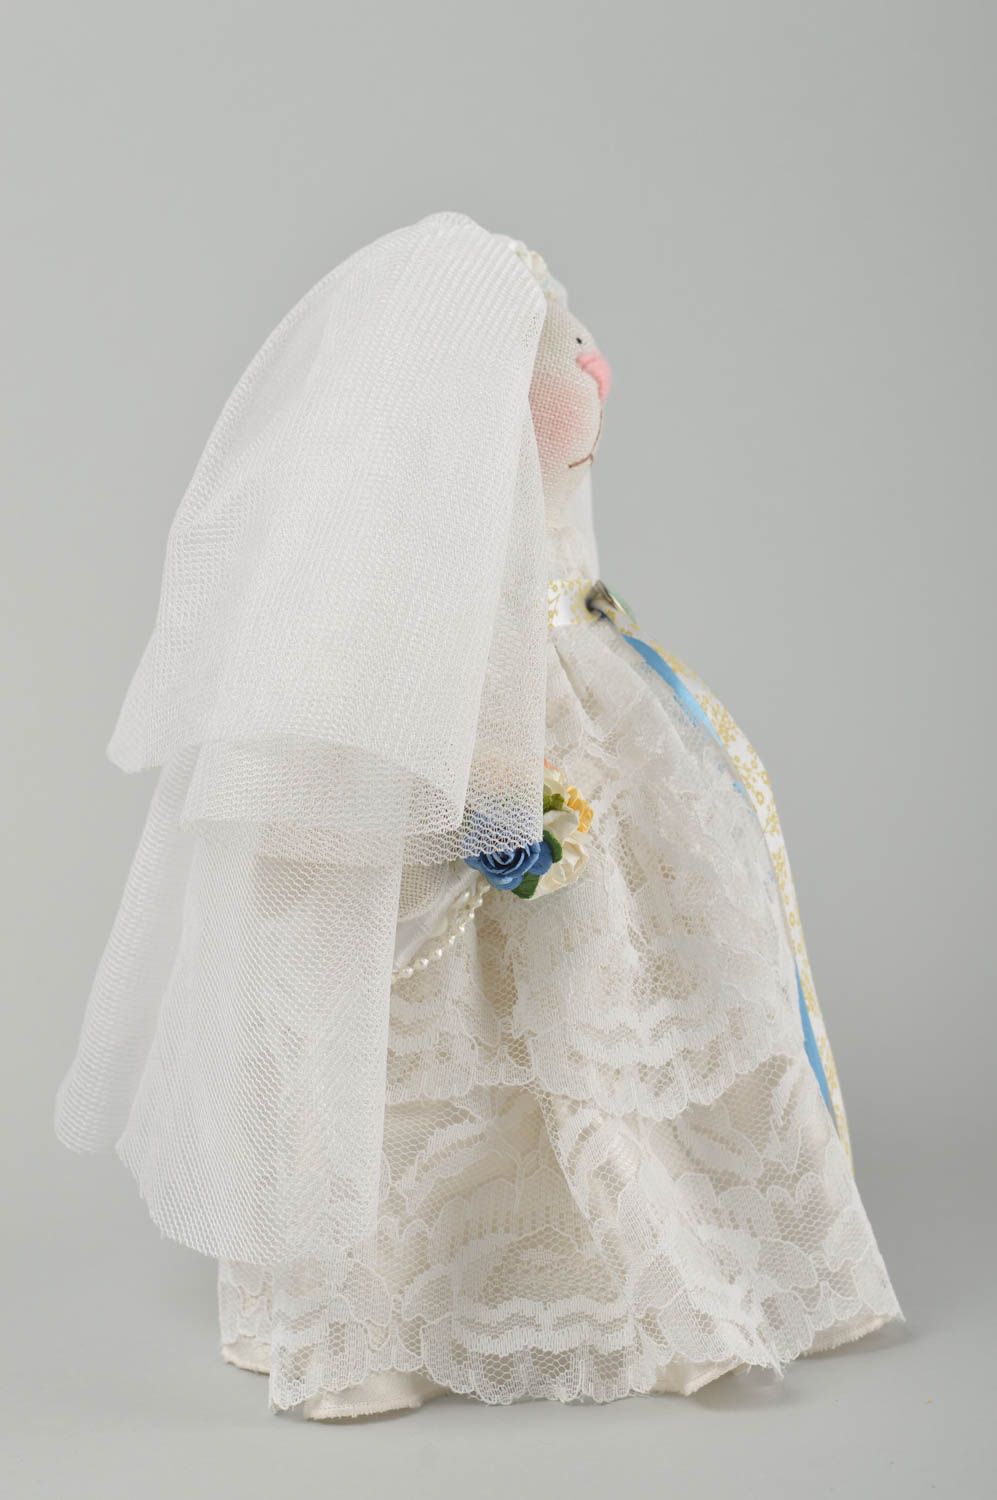 Handmade wedding rabbit unusual soft toy bride stylish wedding decor ideas photo 5